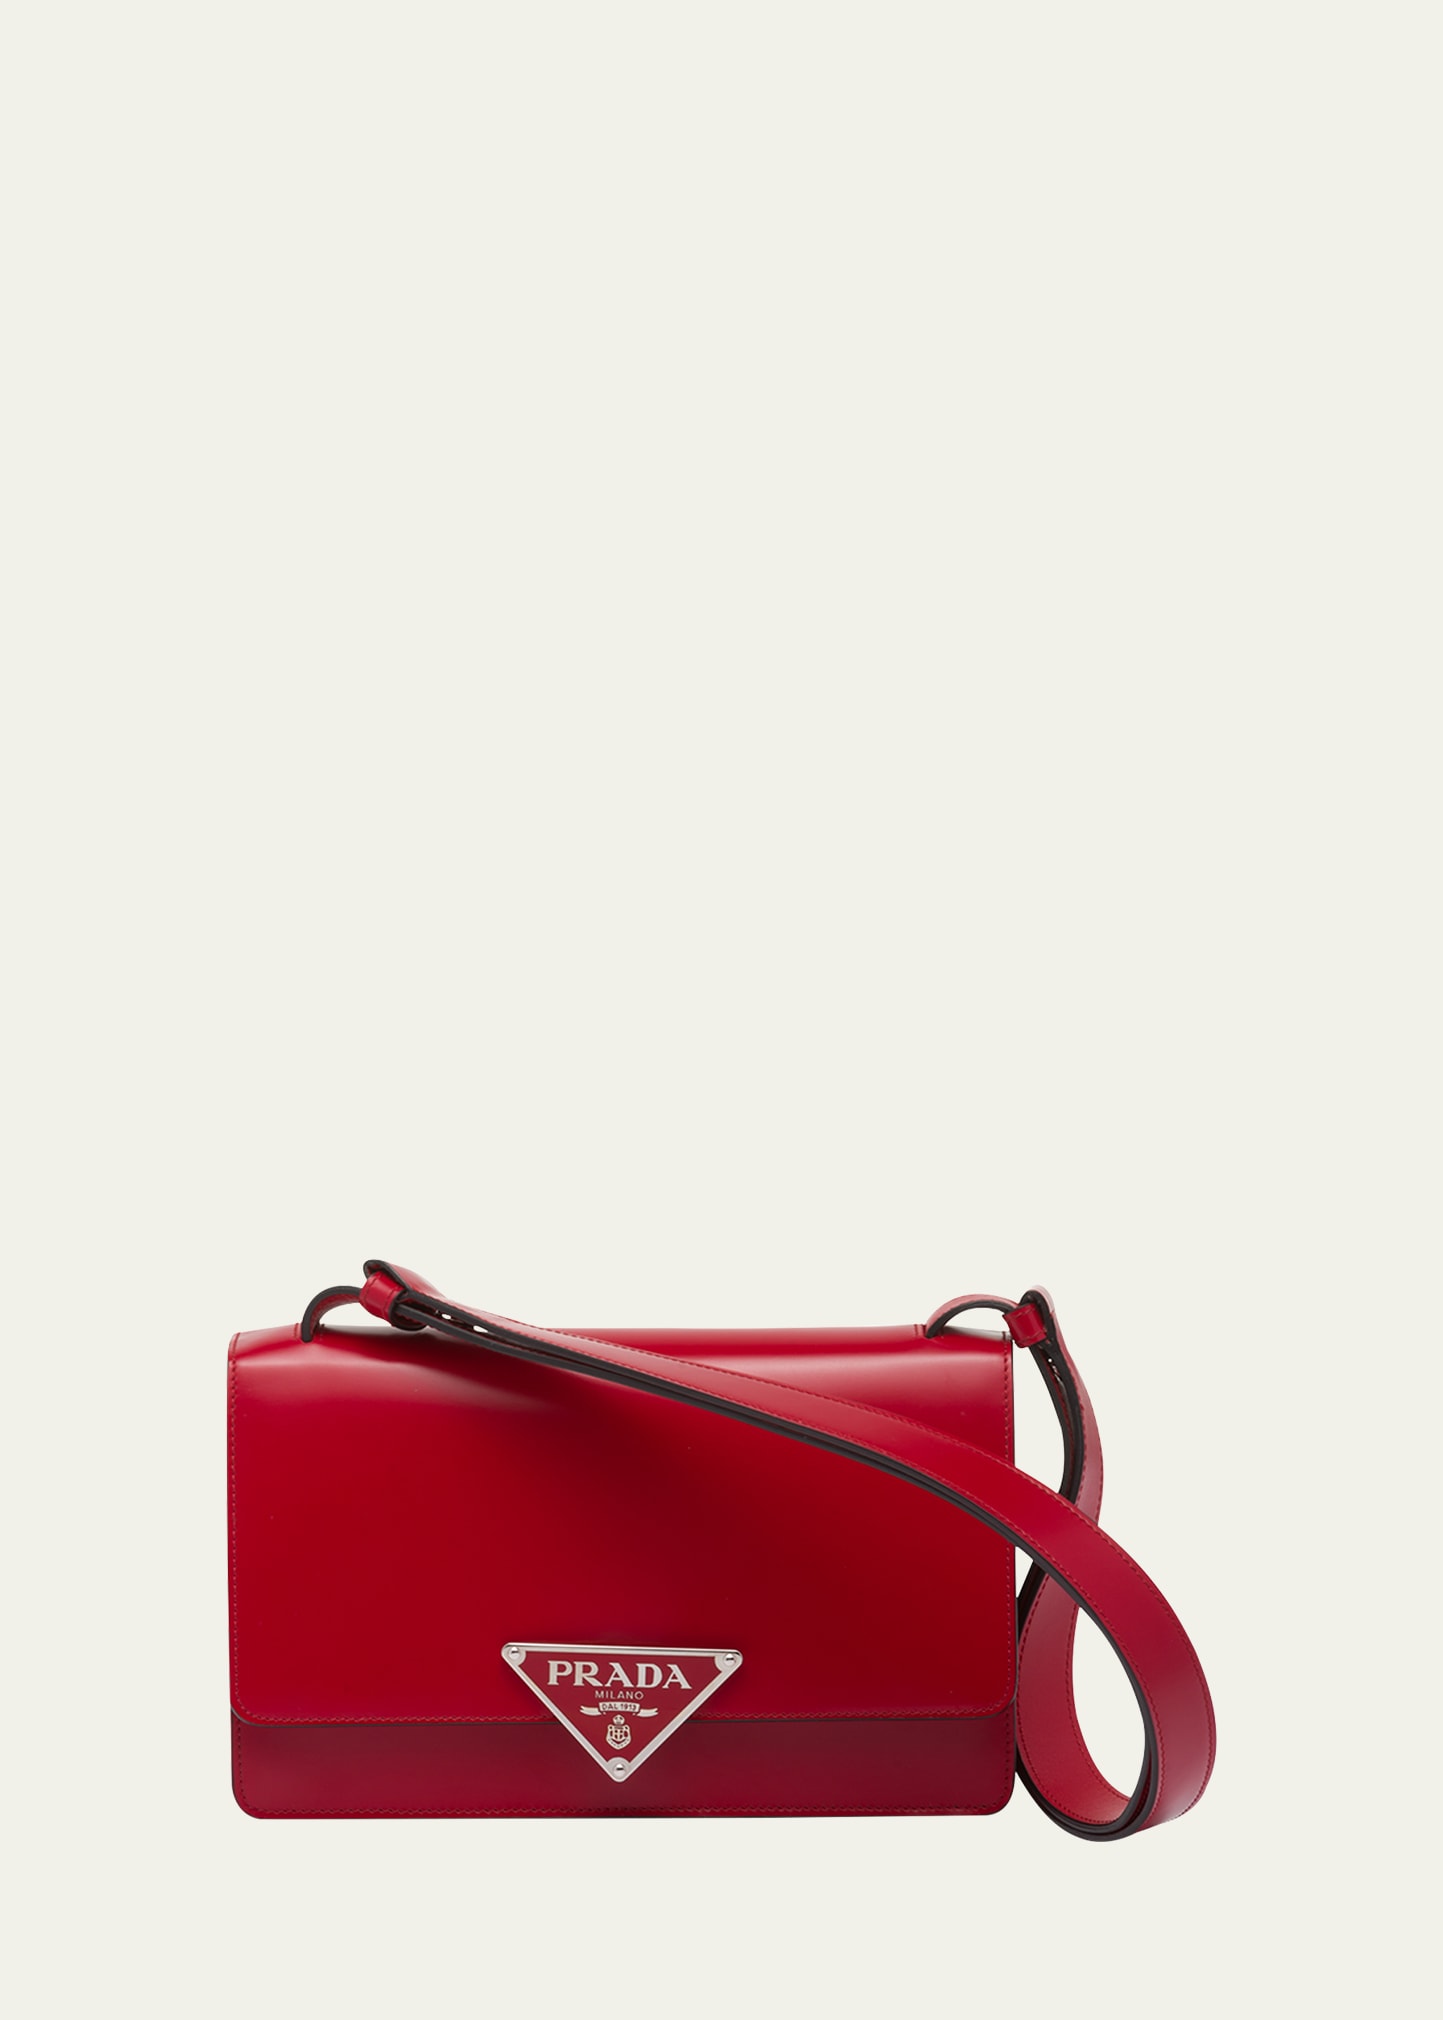 Sfumato Galleria Medium Top-Handle Bag